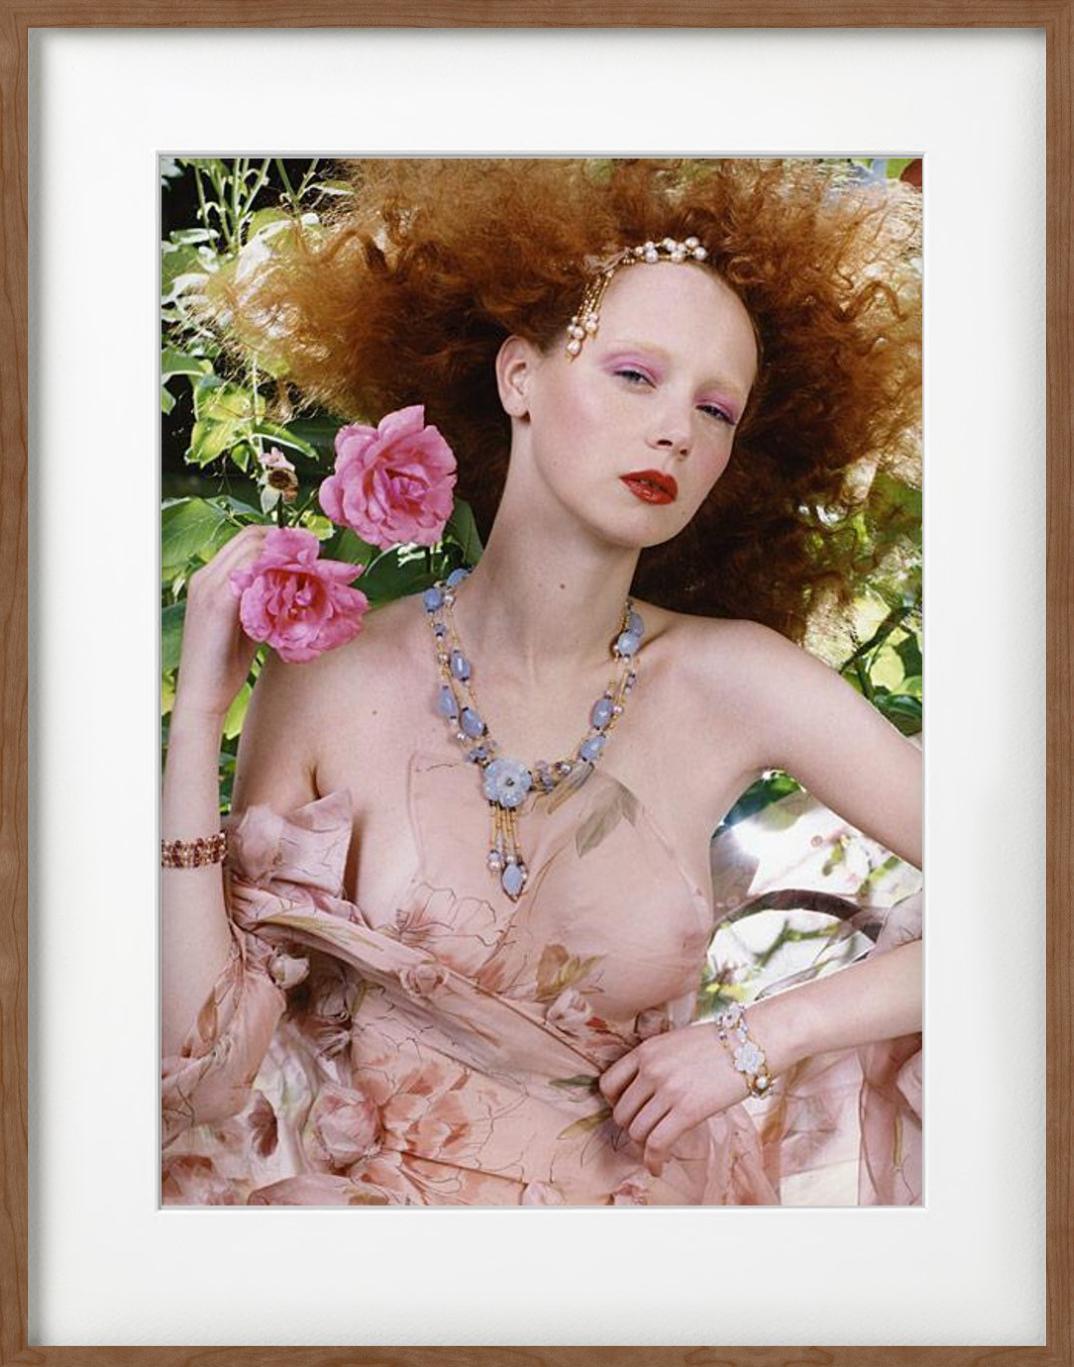 Rotes Haar #2 – halb-nacktes Porträt mit Blumen, Kunstfotografie, 2004 im Angebot 2